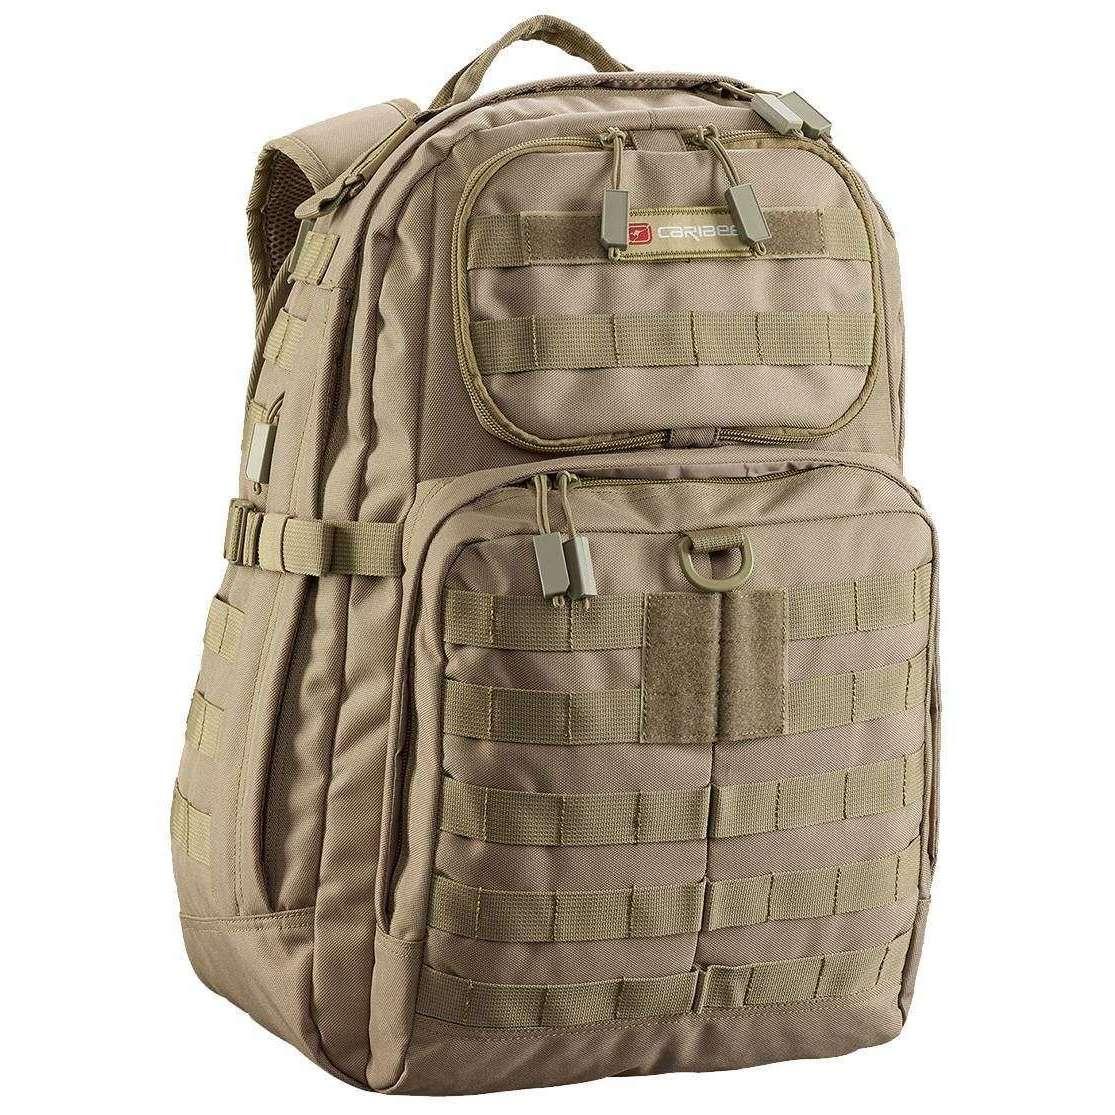 Caribee Combat 32 Backpack | Lyst